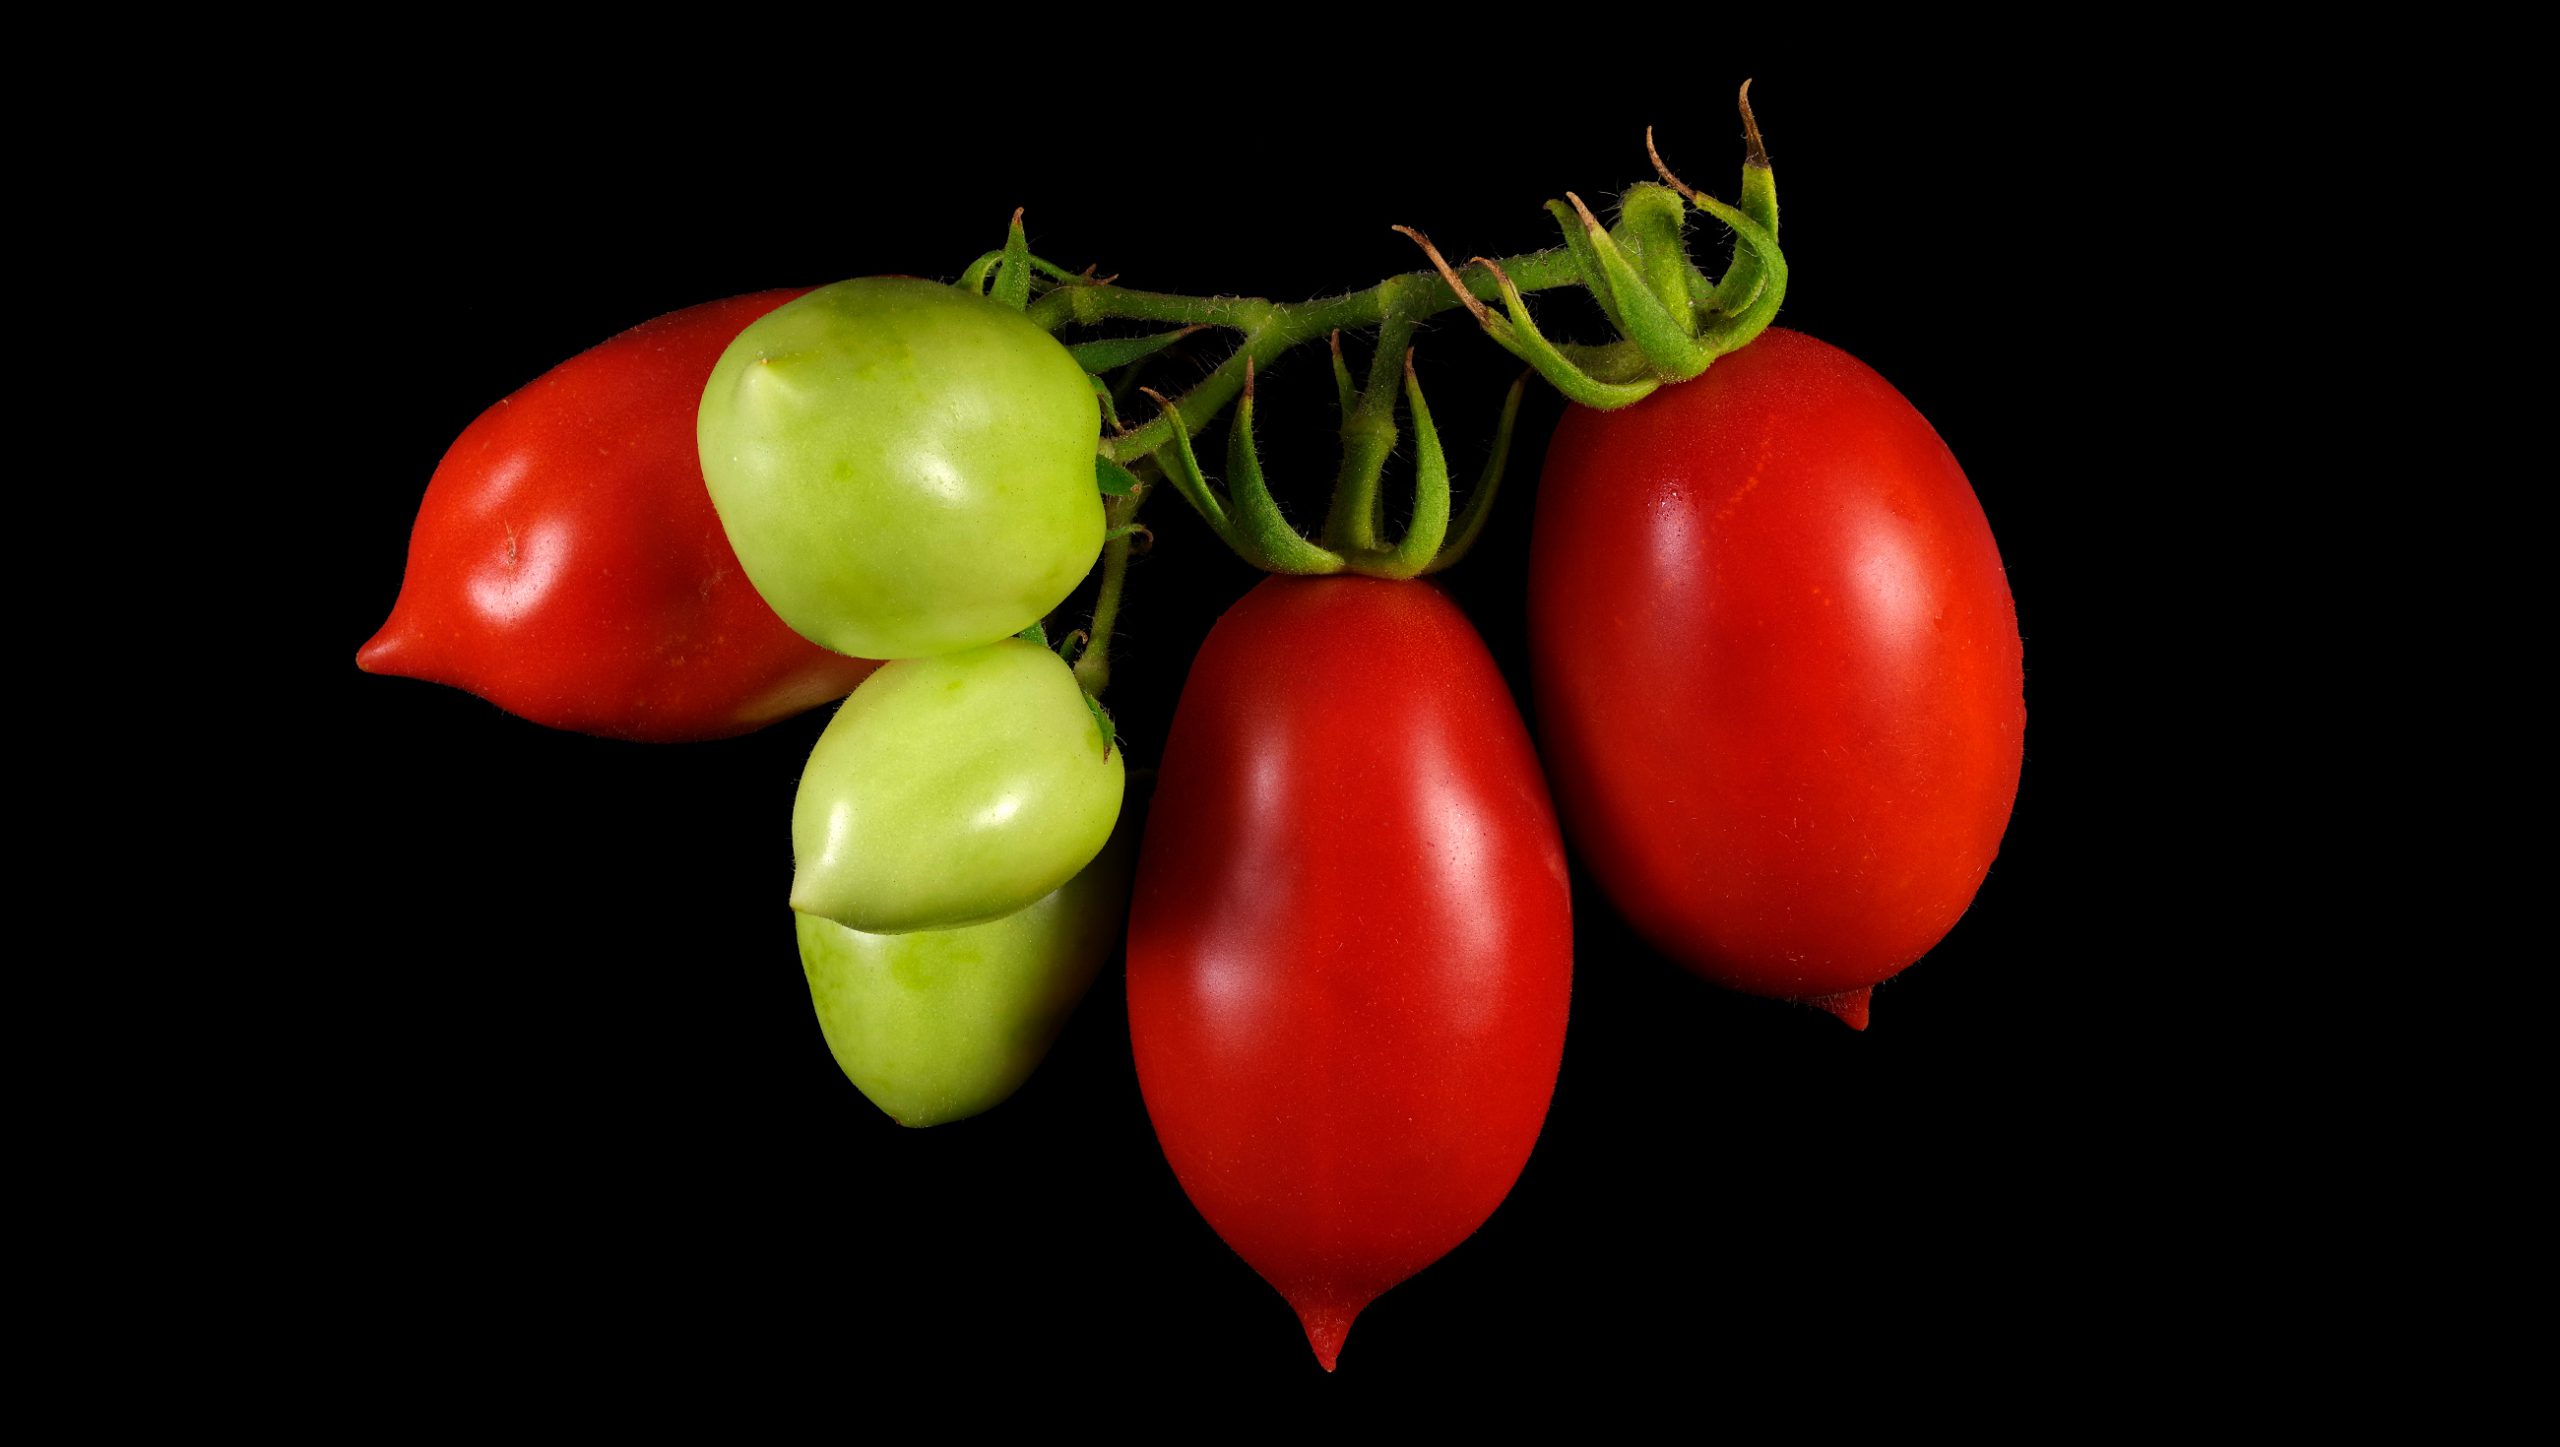 San Marzano Tomato: Solanum lycopersicum ‚San Marzano‘